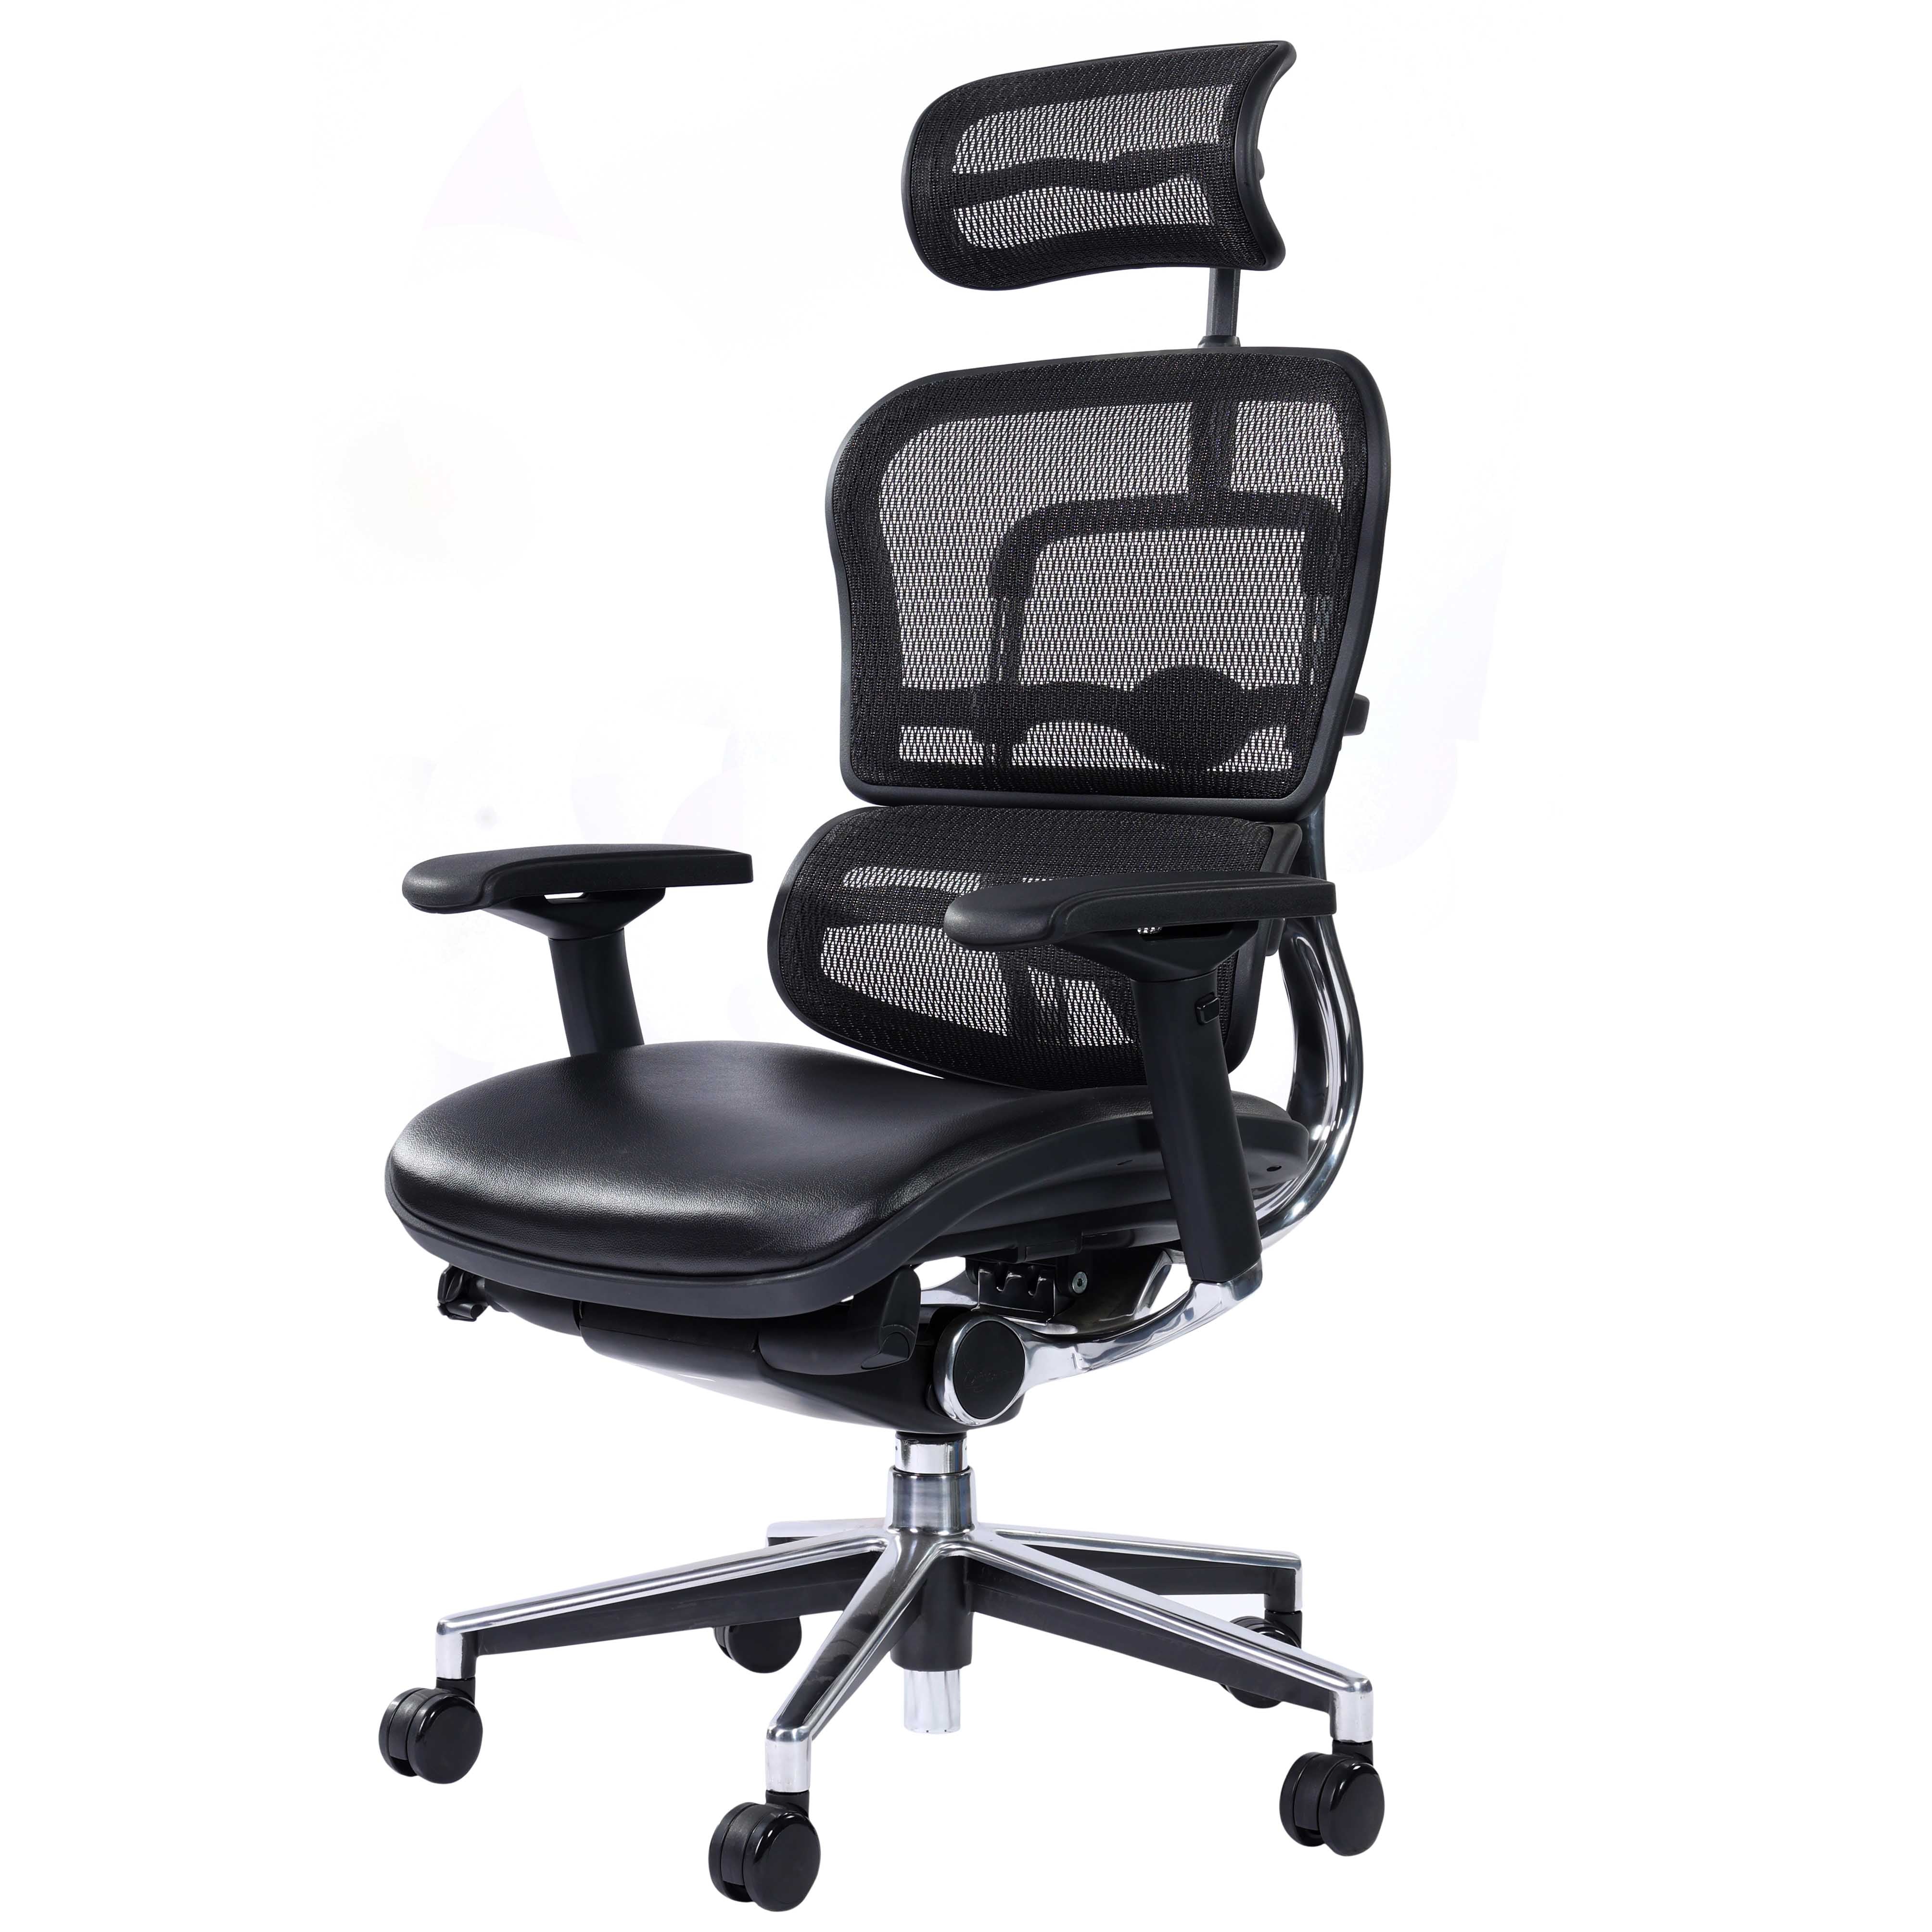 Alpha Prmium Executive Office High Back chair with Lumbar Support and Aluminium Base Chair urbancart